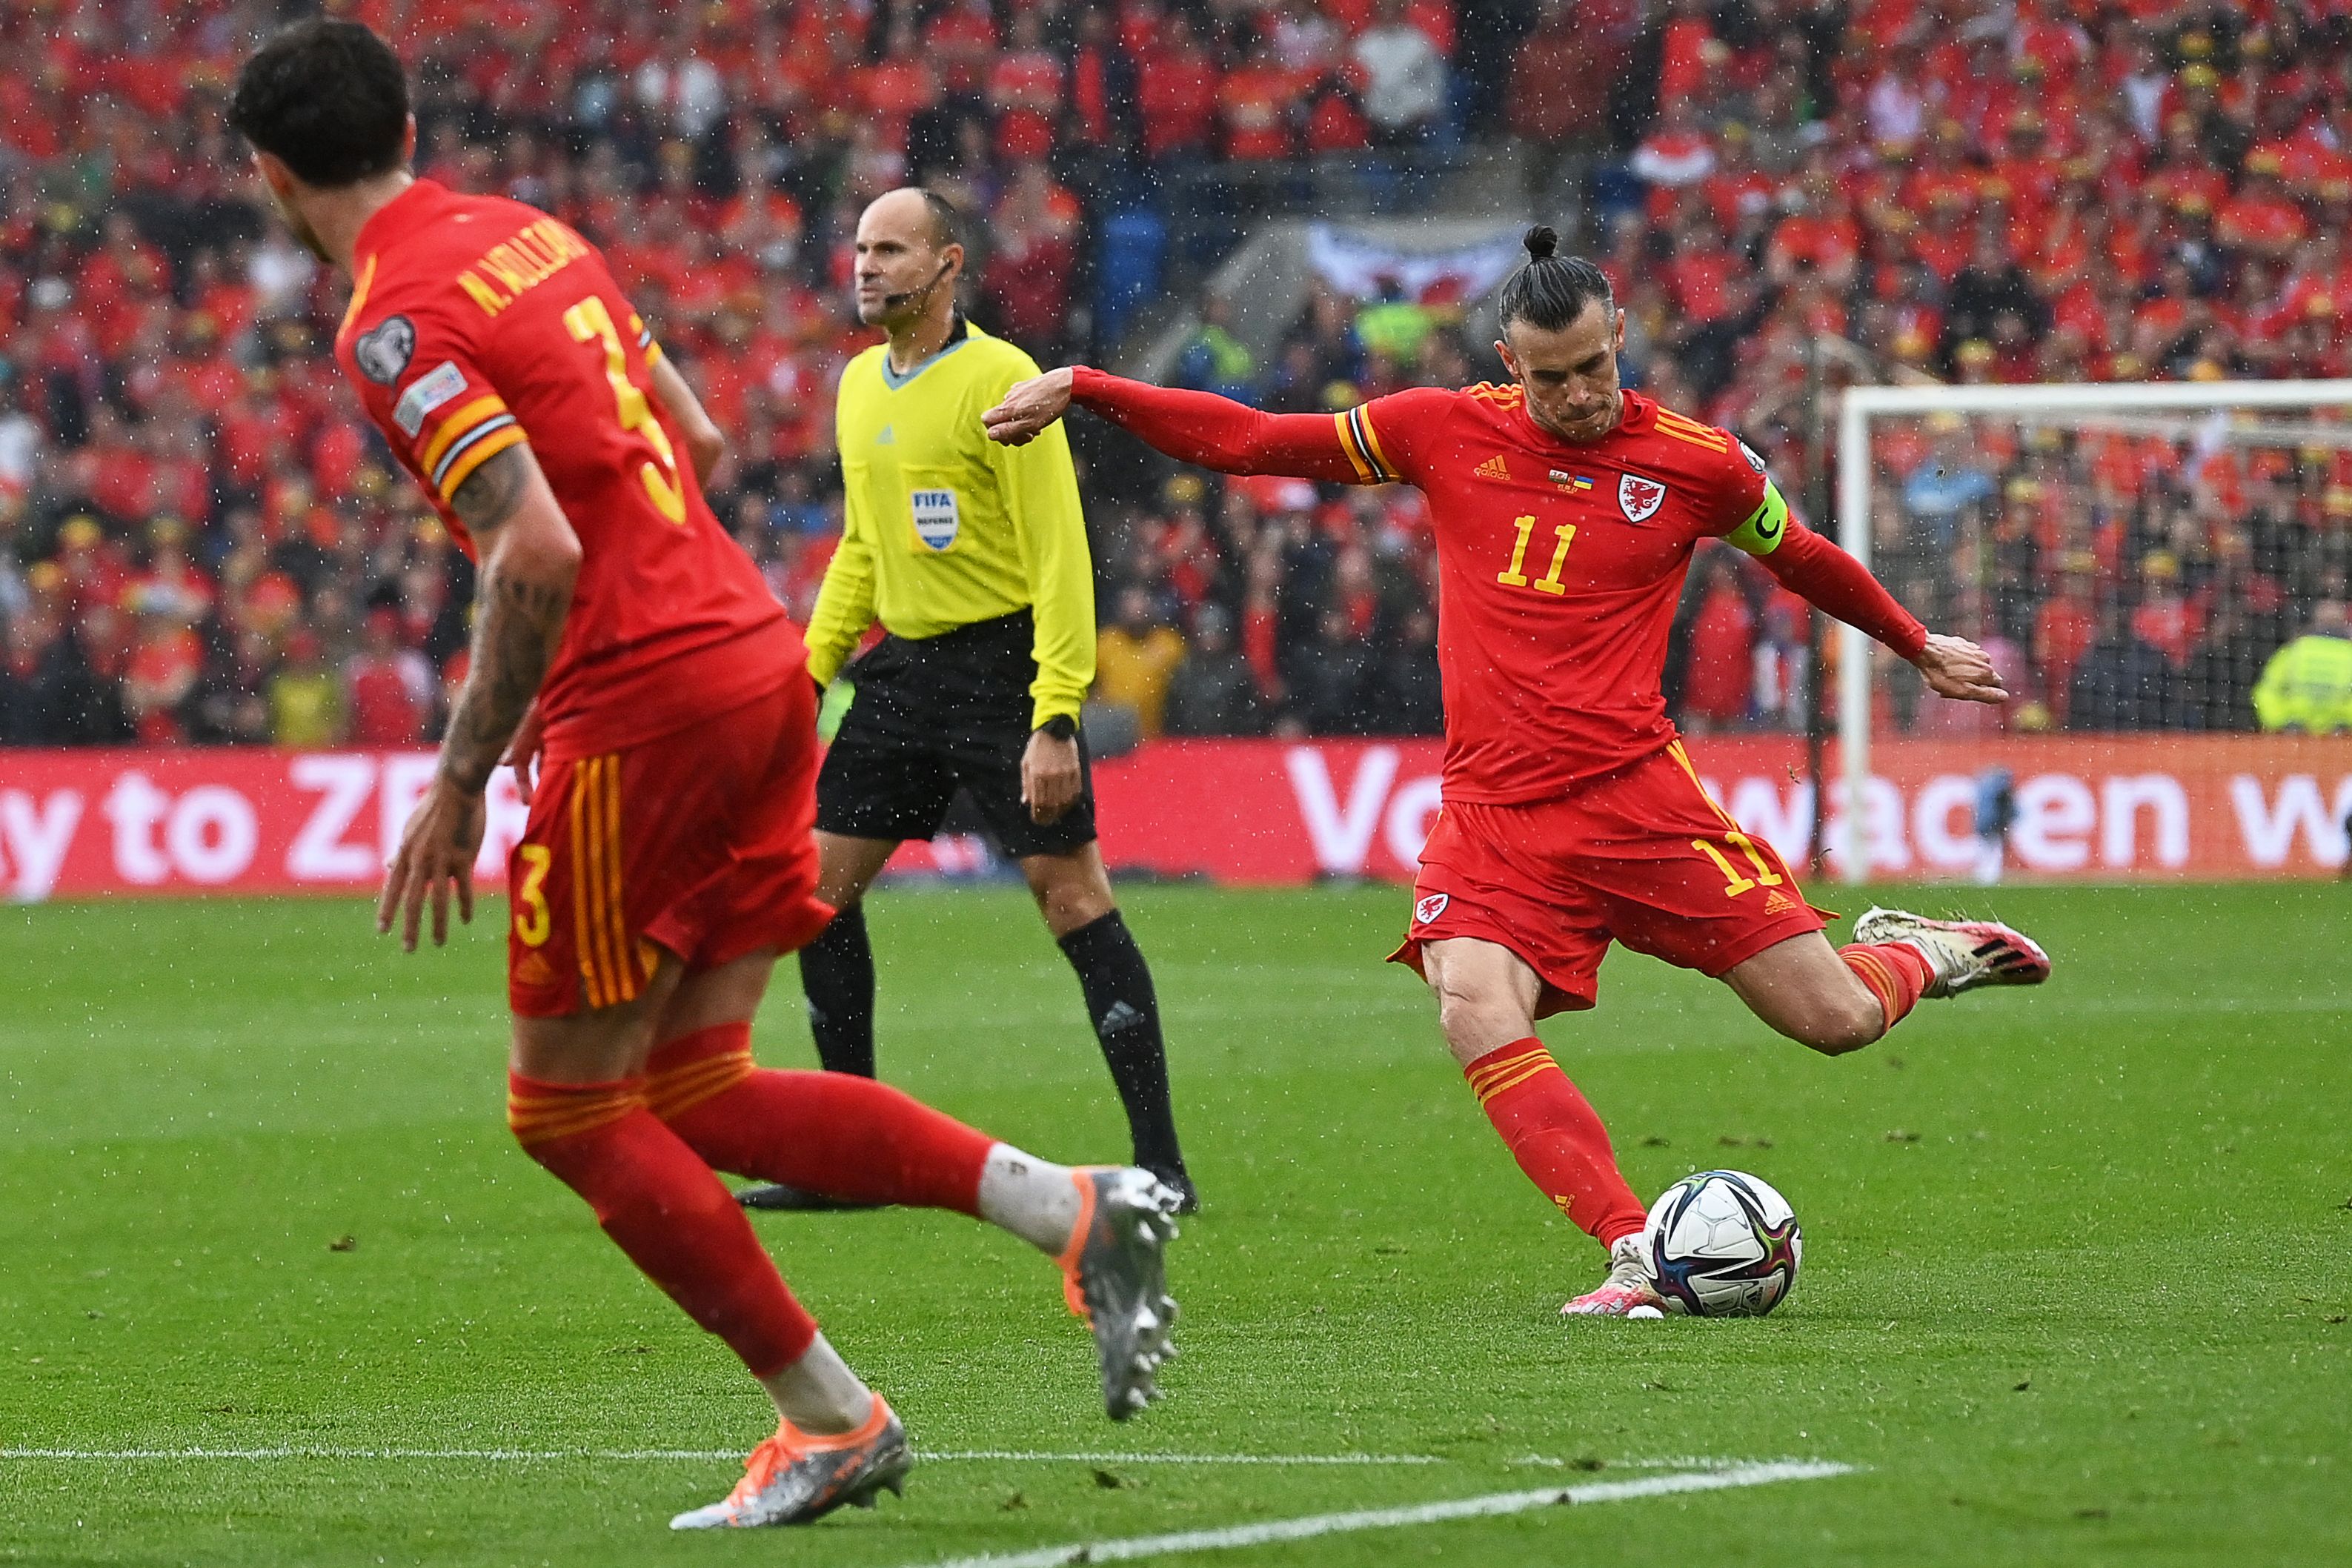 Gareth Bale strikes at goal from a free-kick